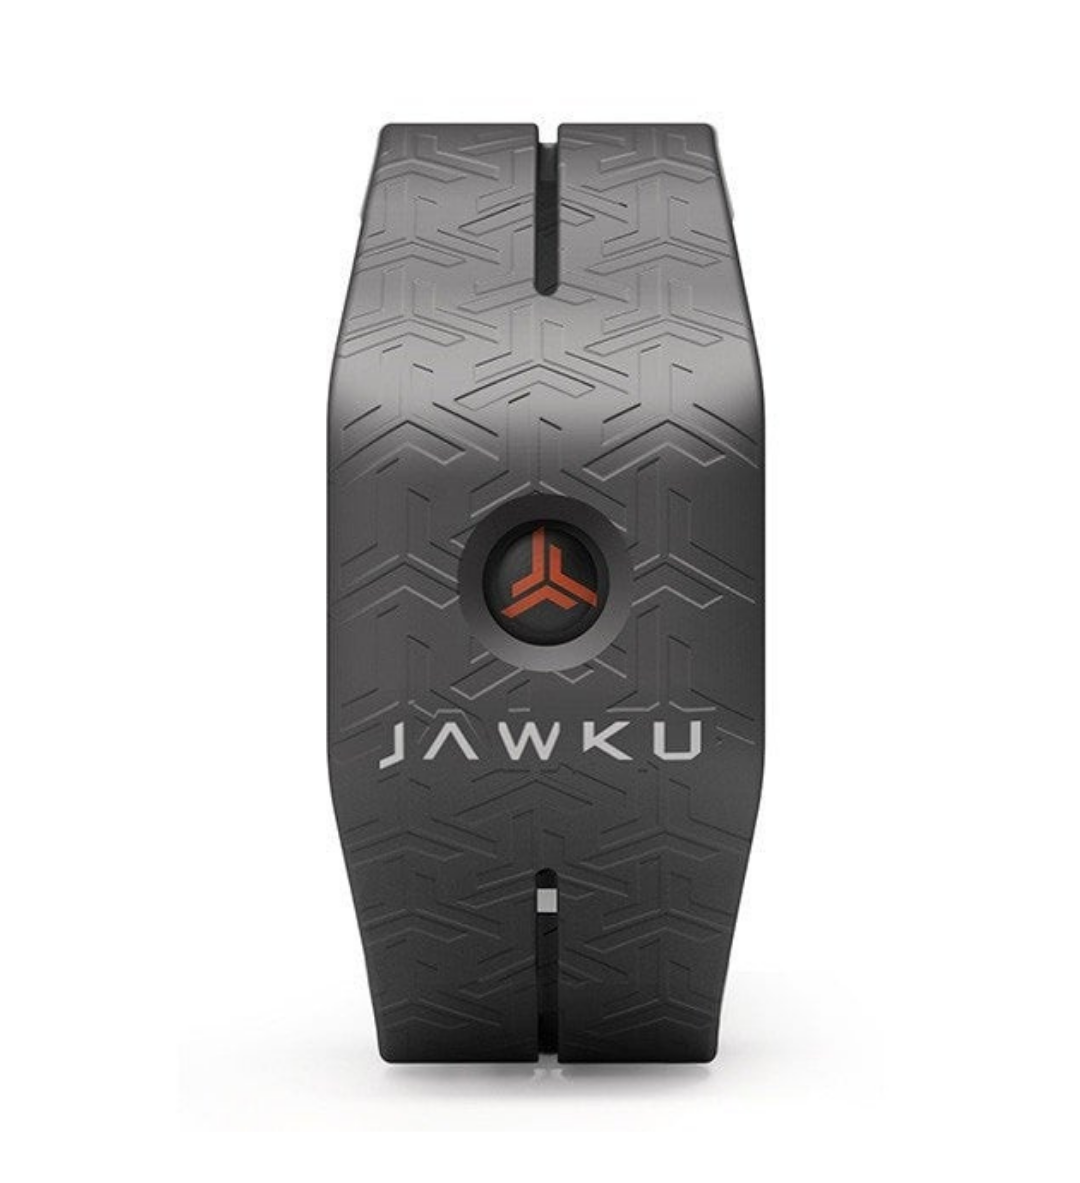 Jawku Sports Performance Products